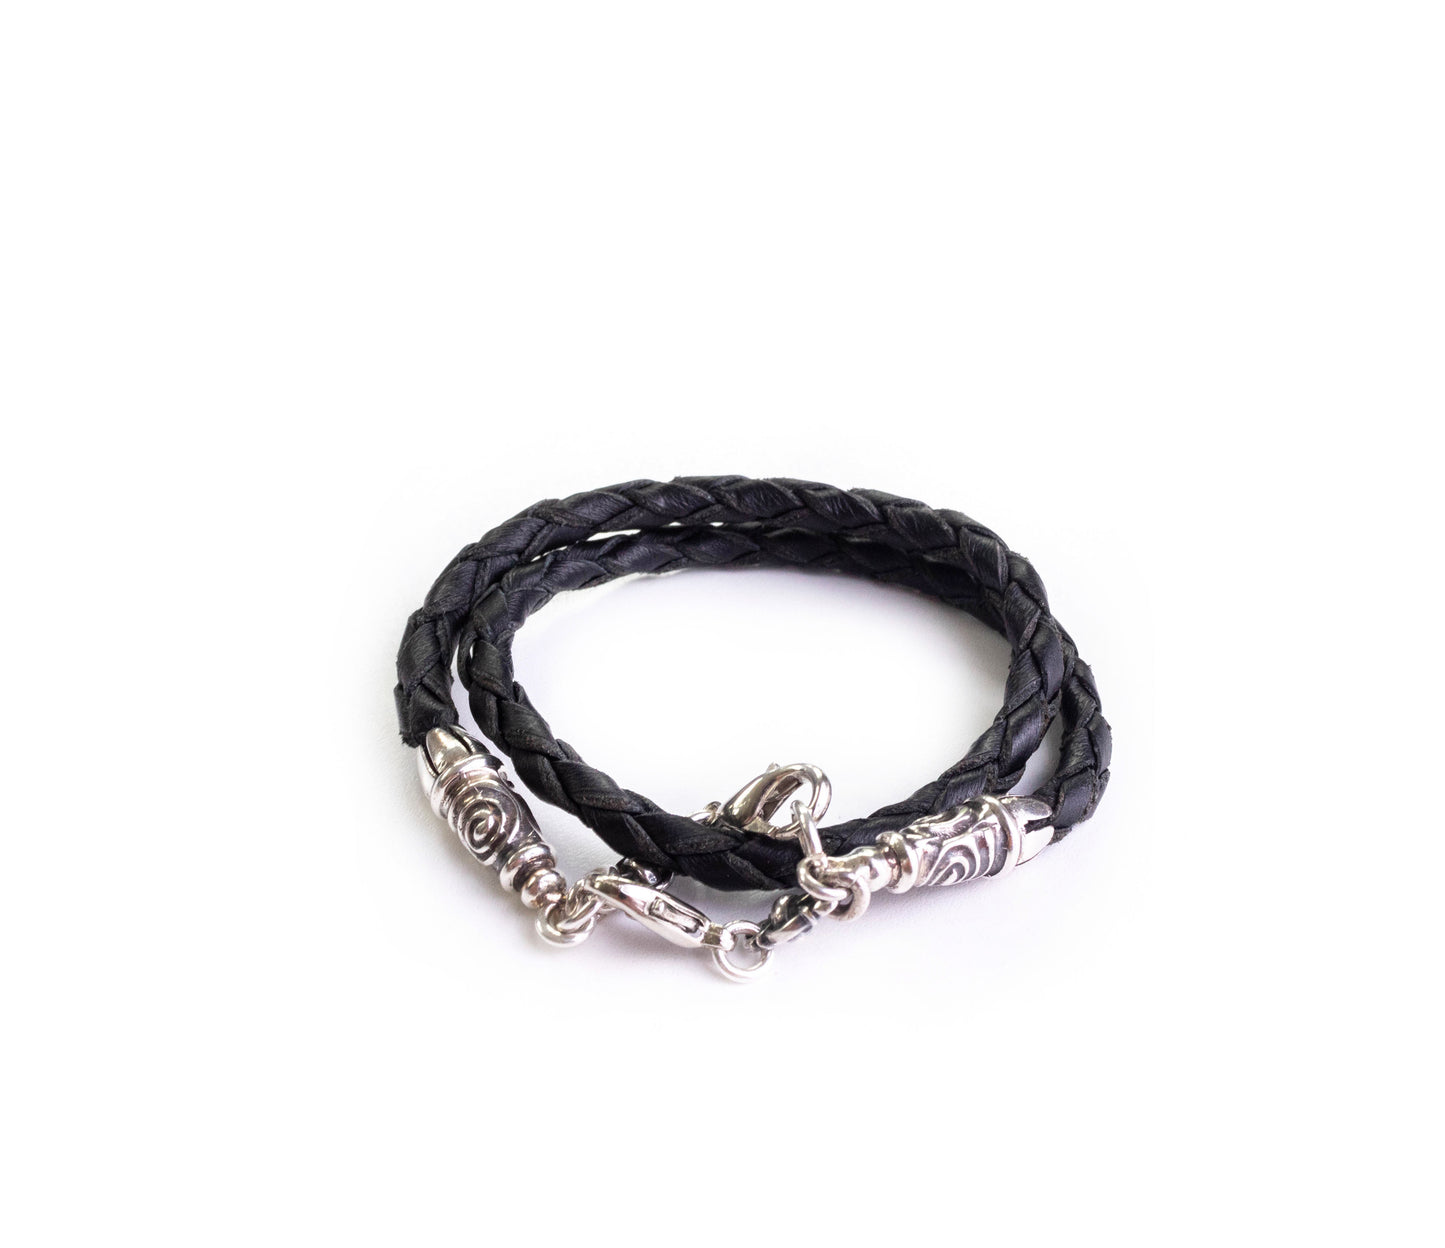 925 Sterling Silver & Genuine Leather Bracelet/Choker/Strap 4 strands Hand-braided.- P22